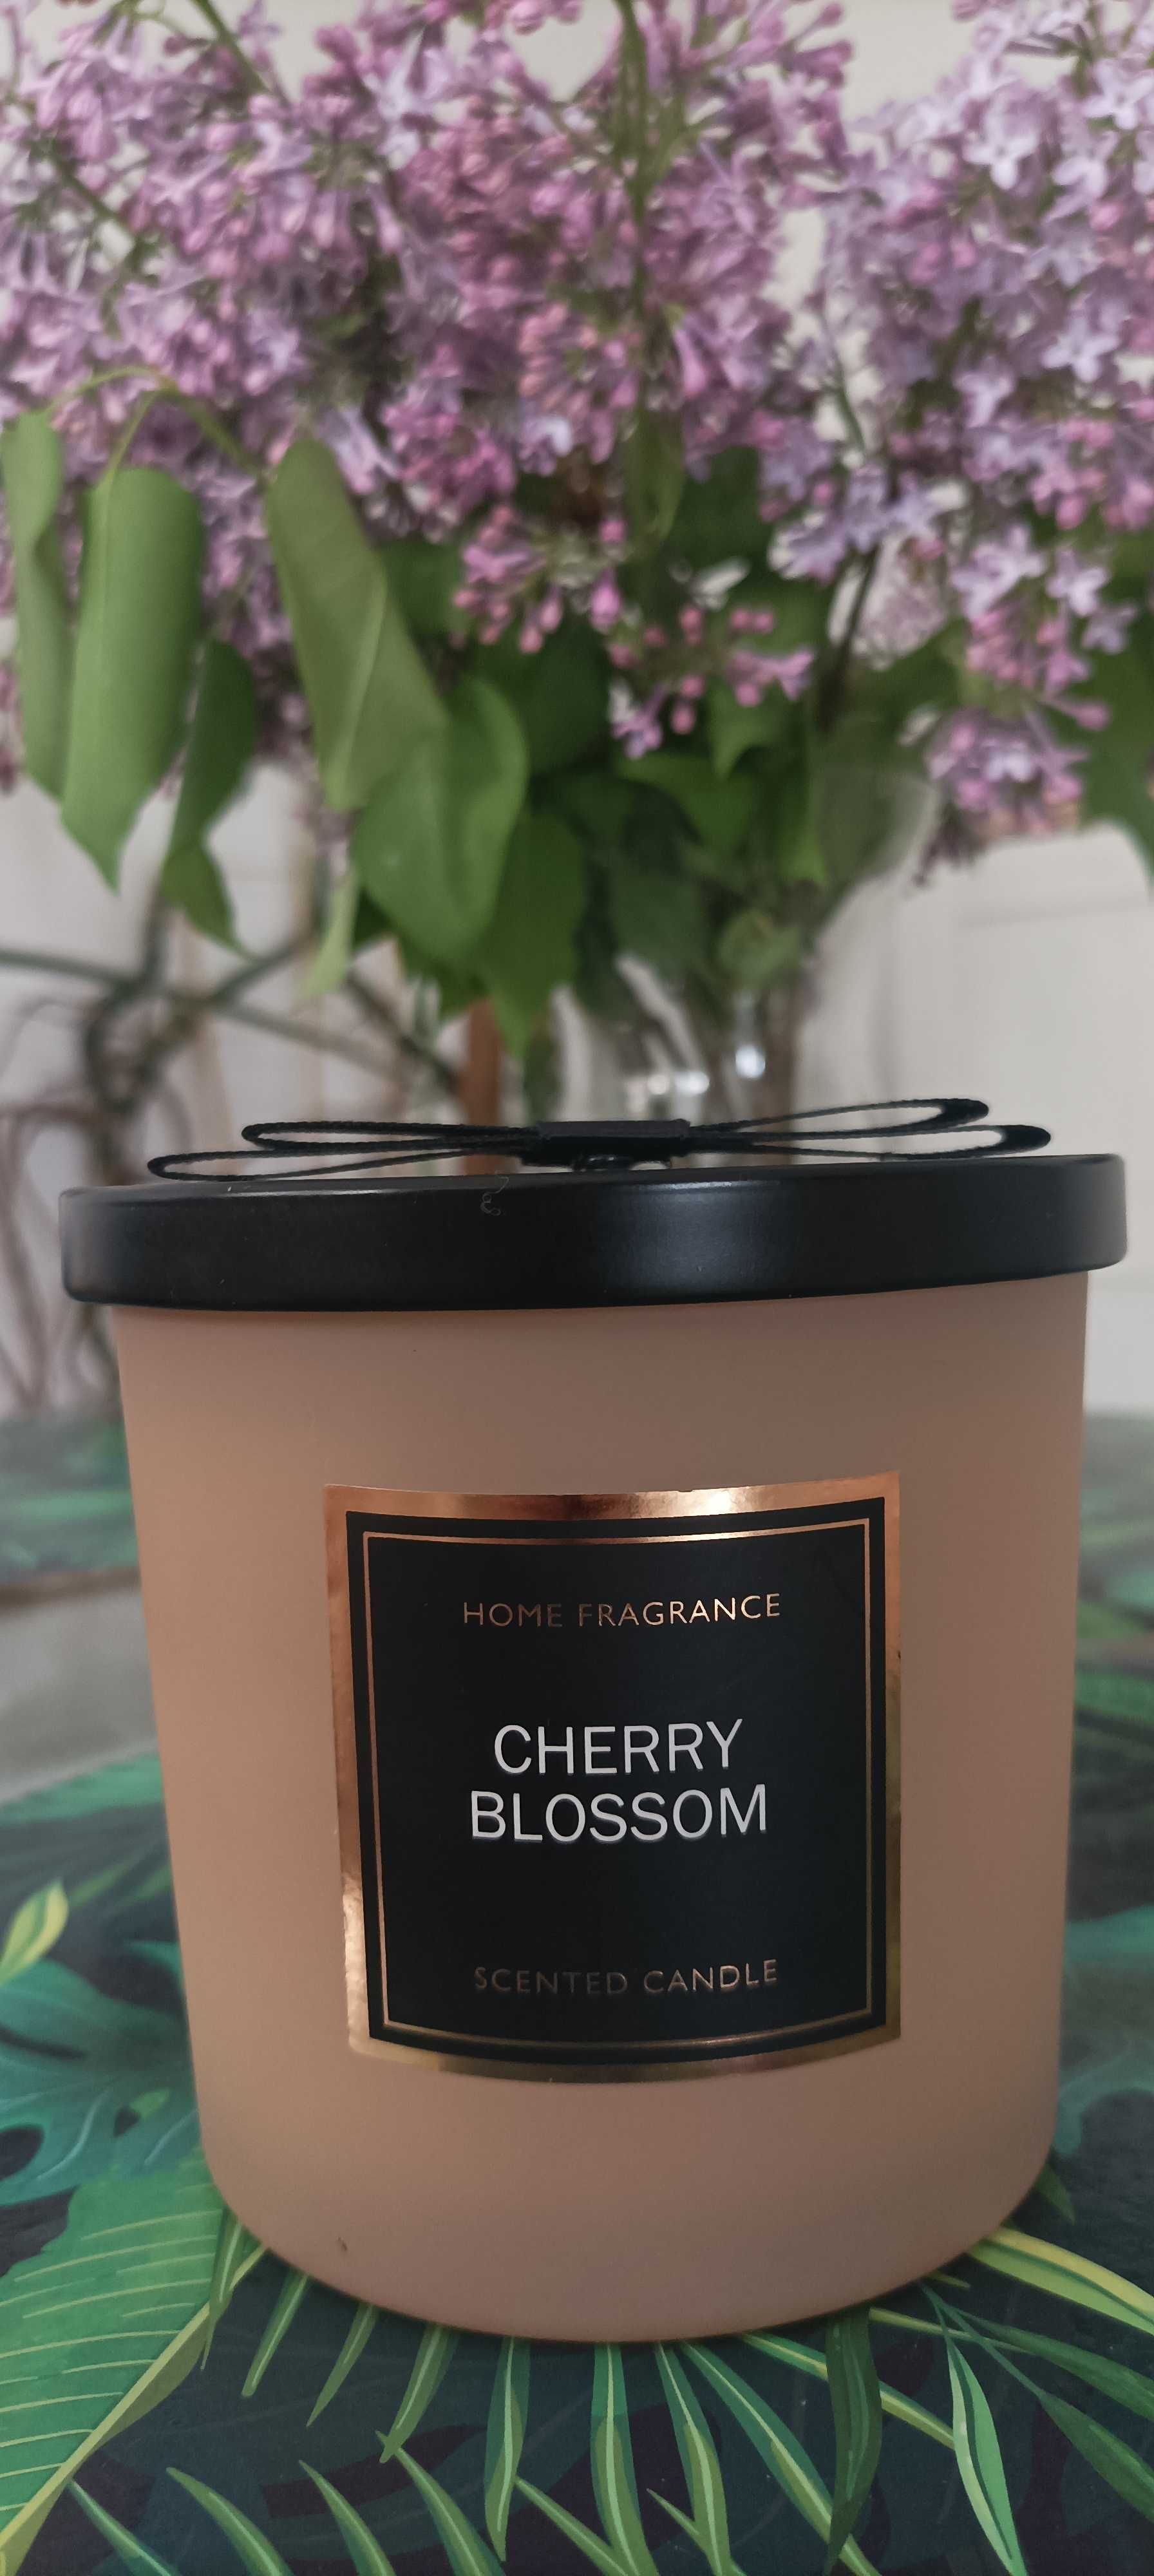 Świeczka Cherry Blossom home fragrance scented candle